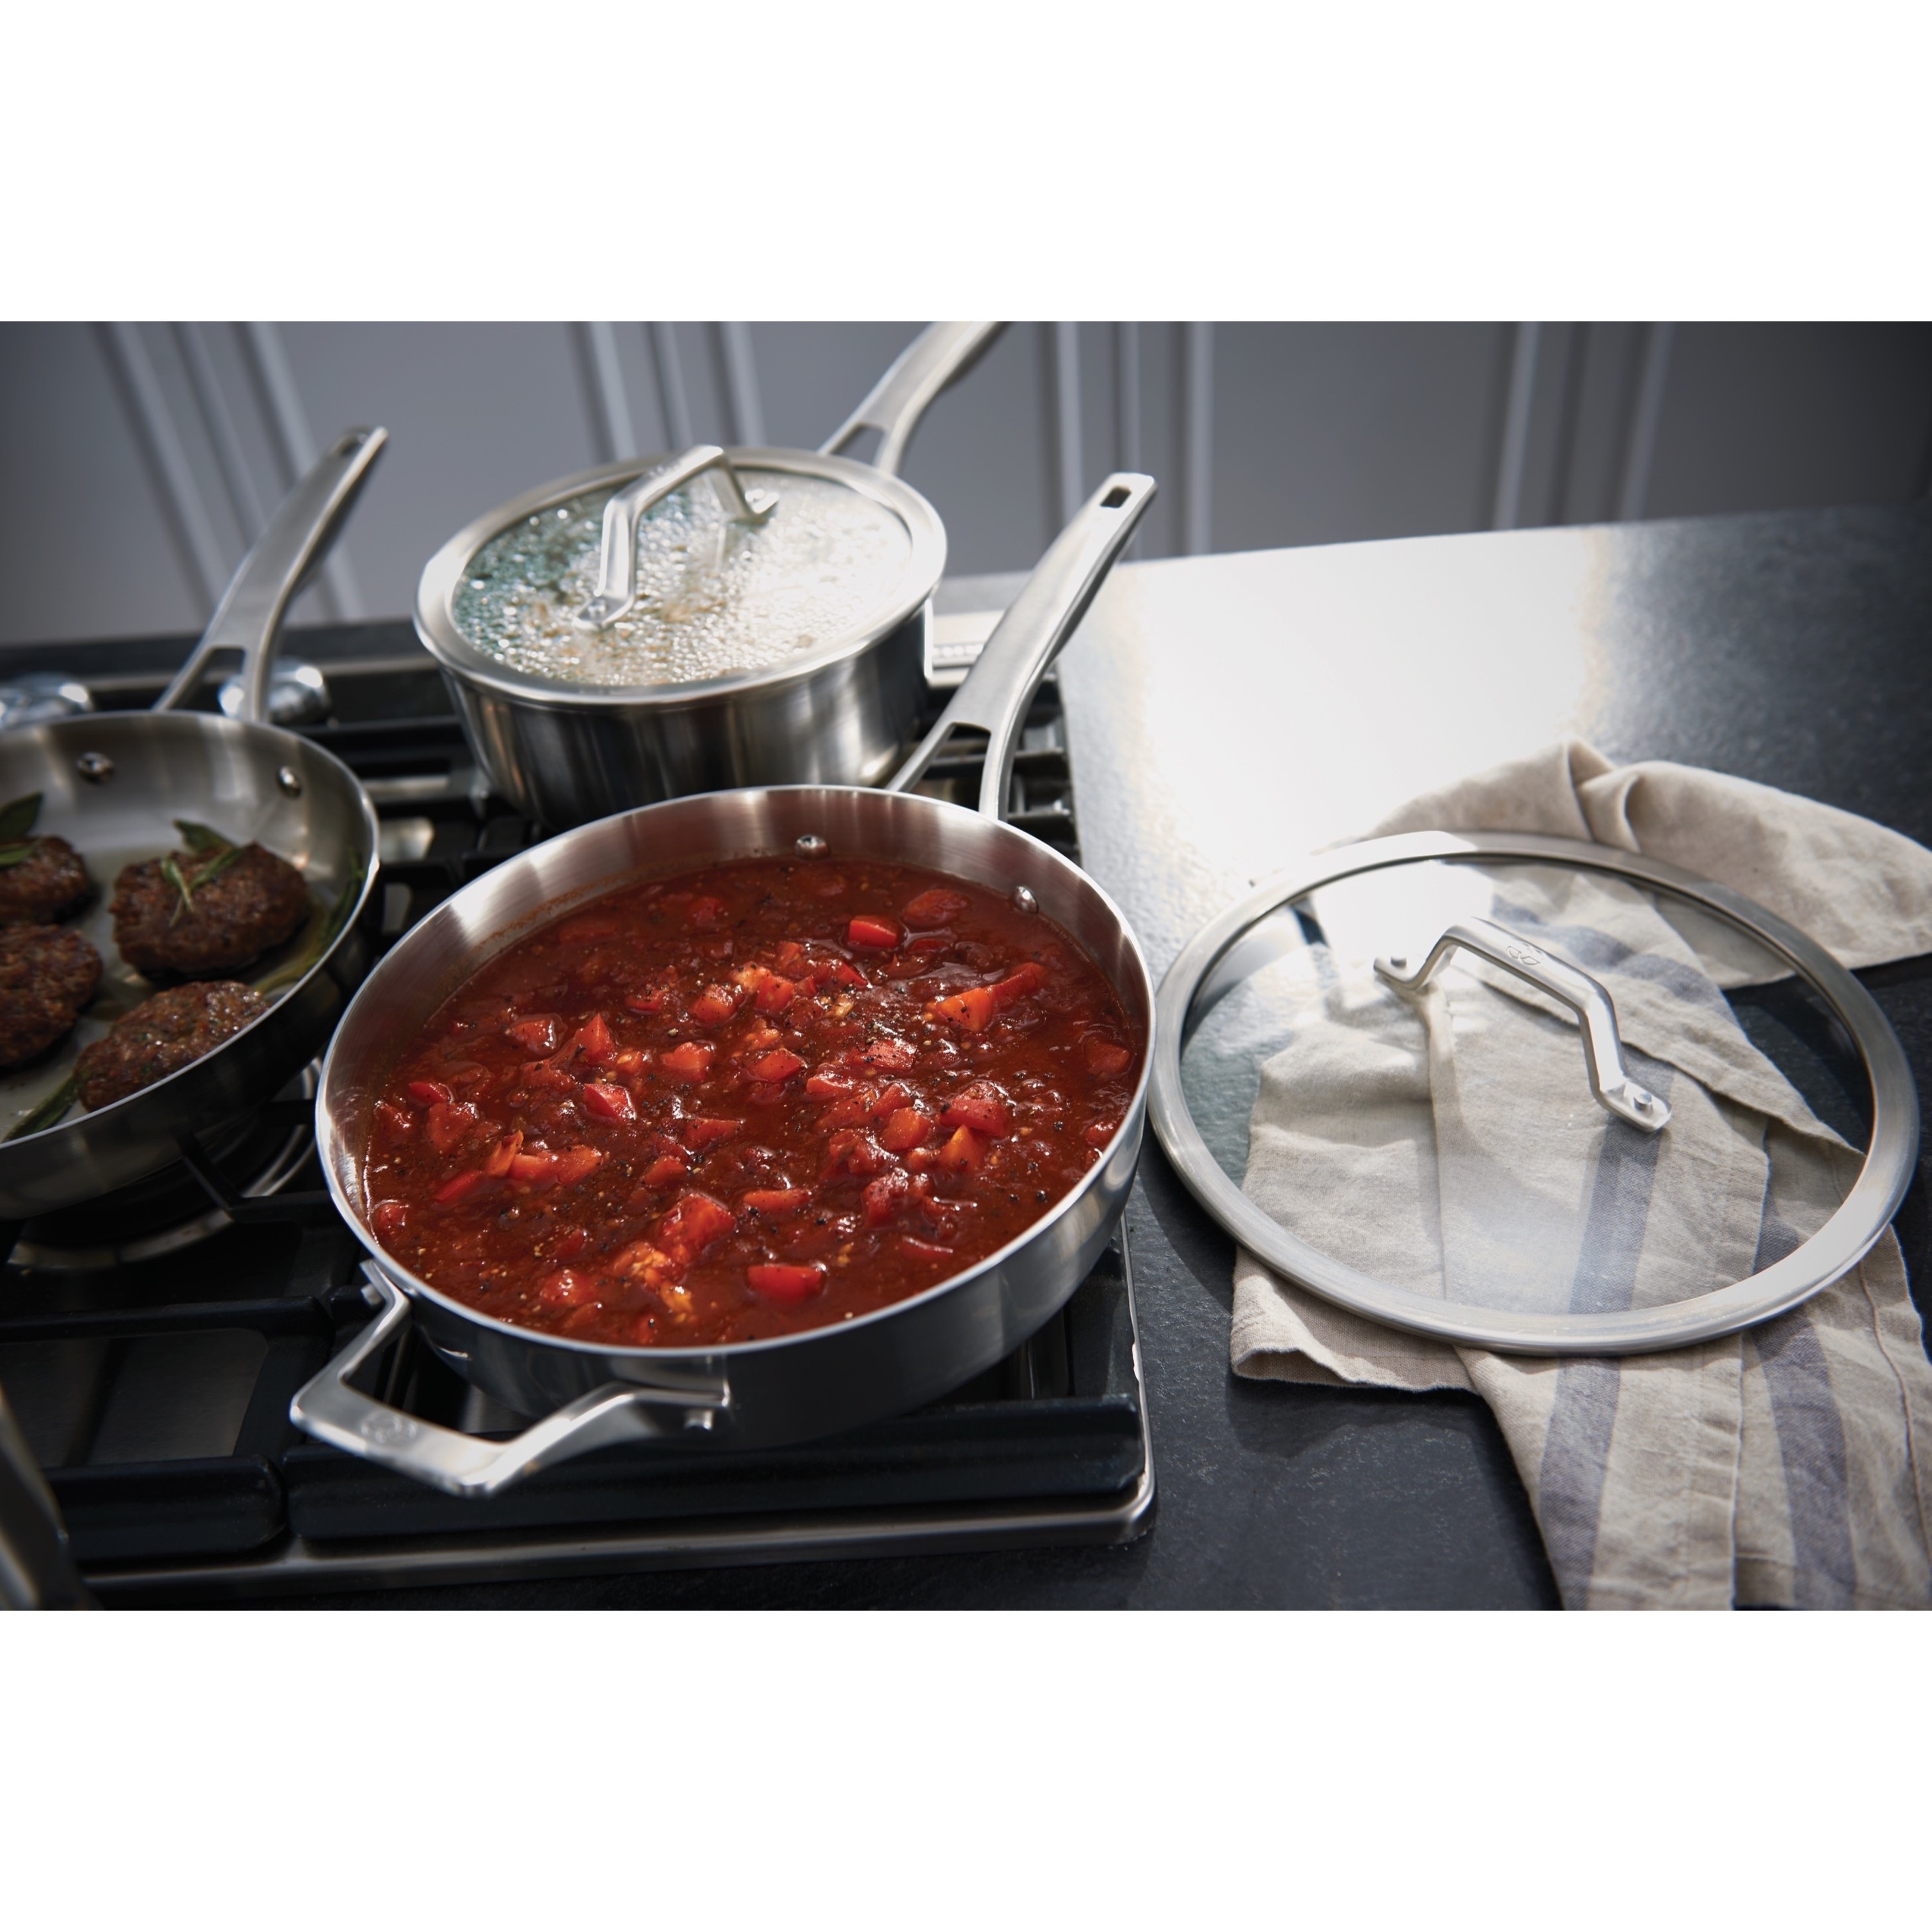 Calphalon Premier 12-Piece Stainless Steel Cookware Set, Pots & Pans, Lids,  NEW 16853112944